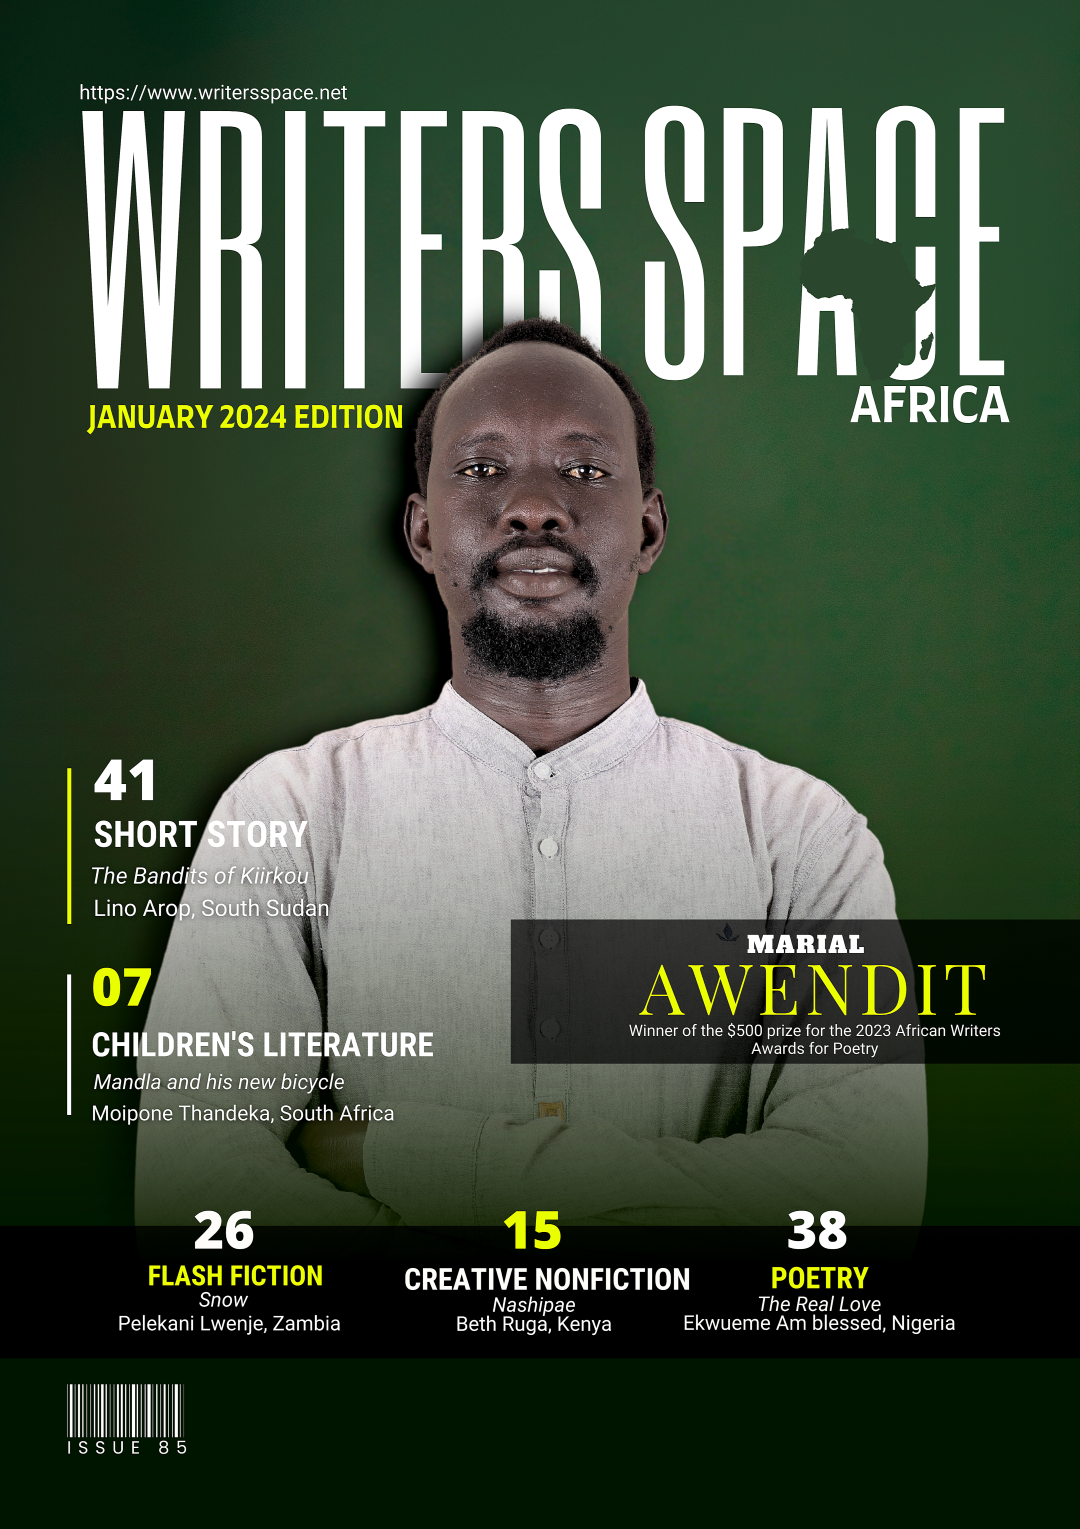 WSA Literary Magazine - January 2024 Edition Cover